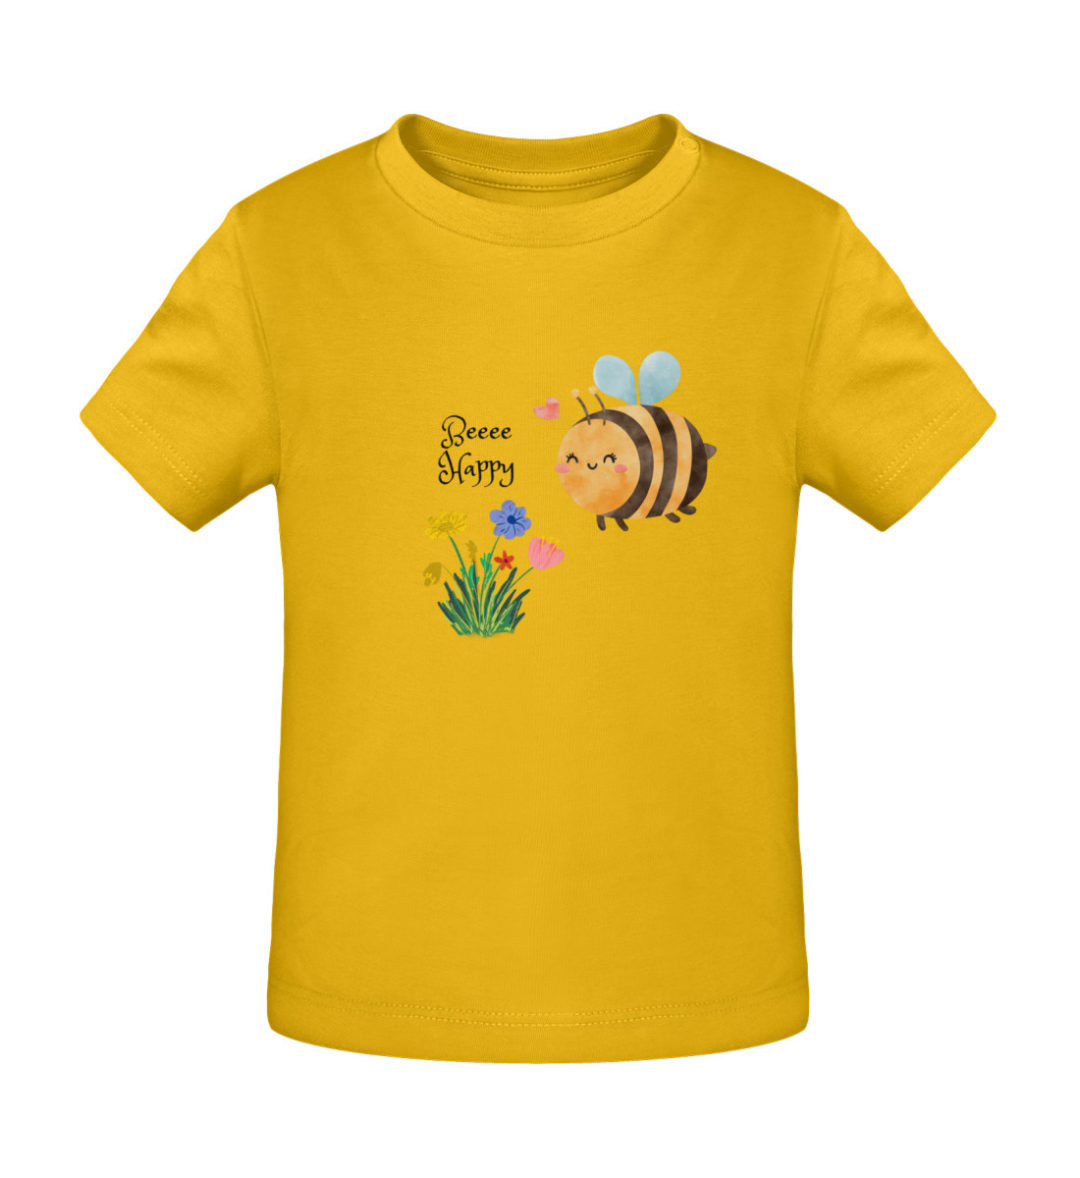 Beee happy - Baby Creator T-Shirt ST/ST-6885